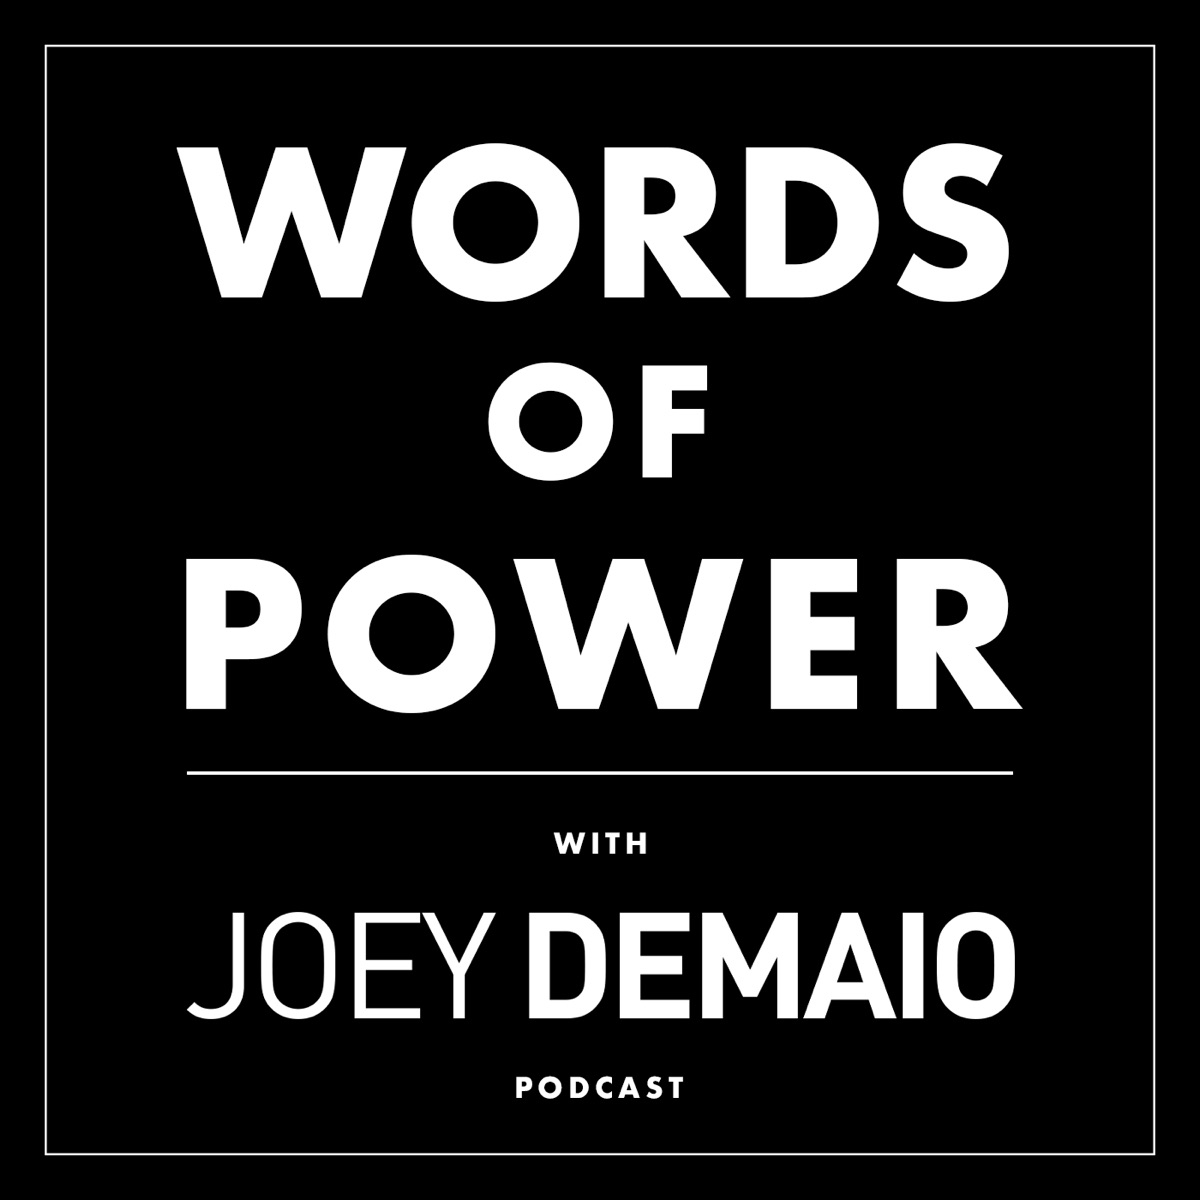 Joey DeMaio podcast